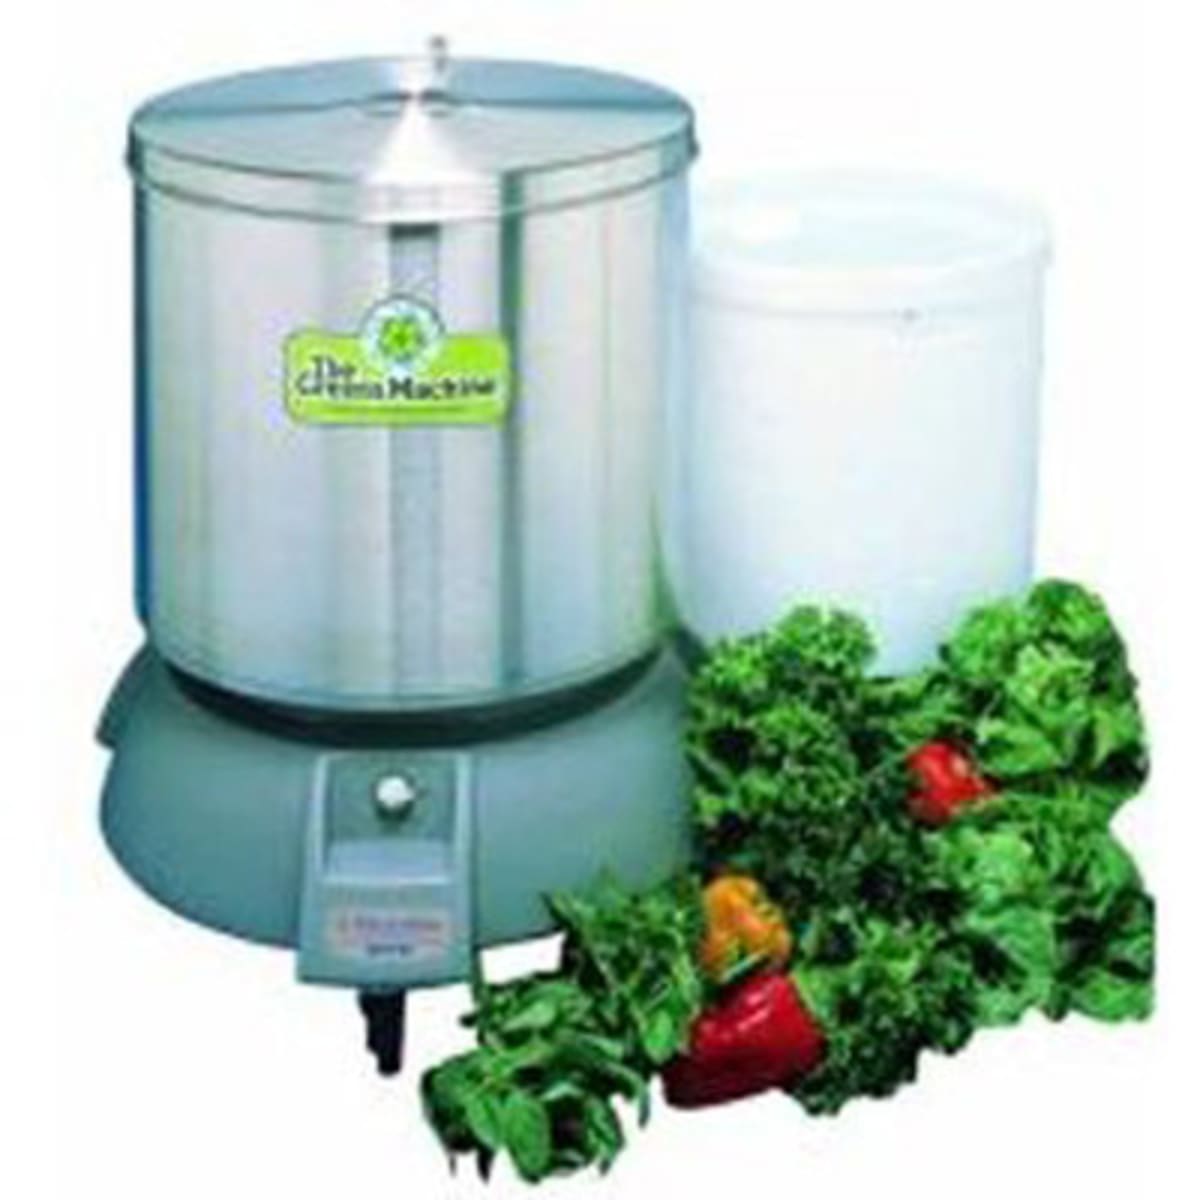 Electrolux 602023 Green Machine 20 Gallon 220V Vegetable Dryer